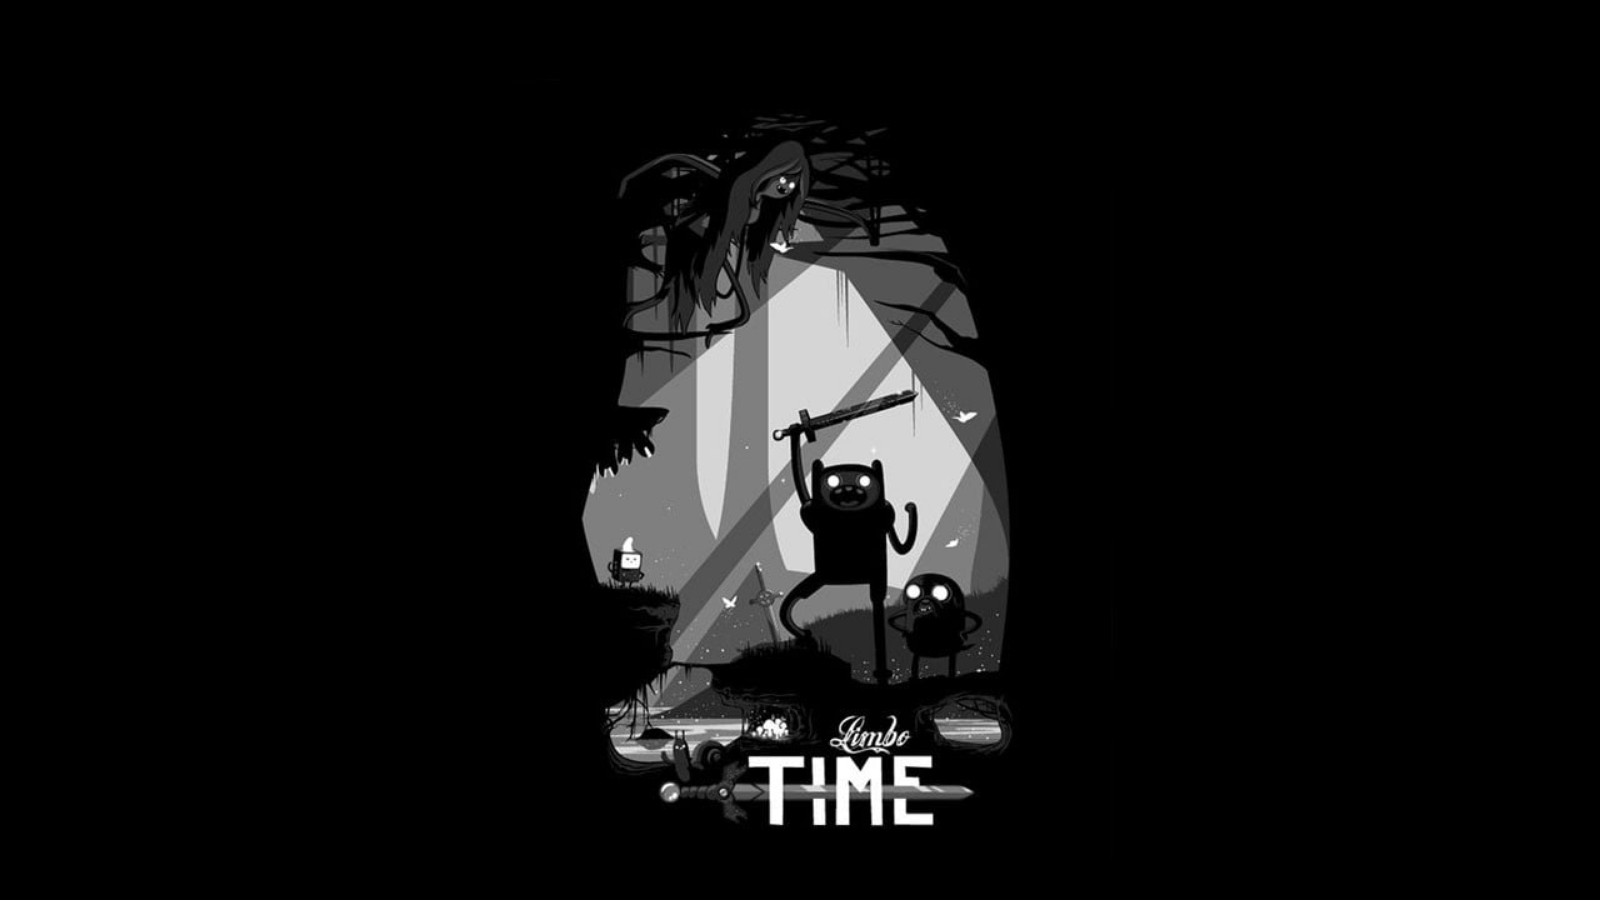 General 1600x900 Adventure Time Jake the Dog Finn the Human Limbo dark crossover black digital art simple background